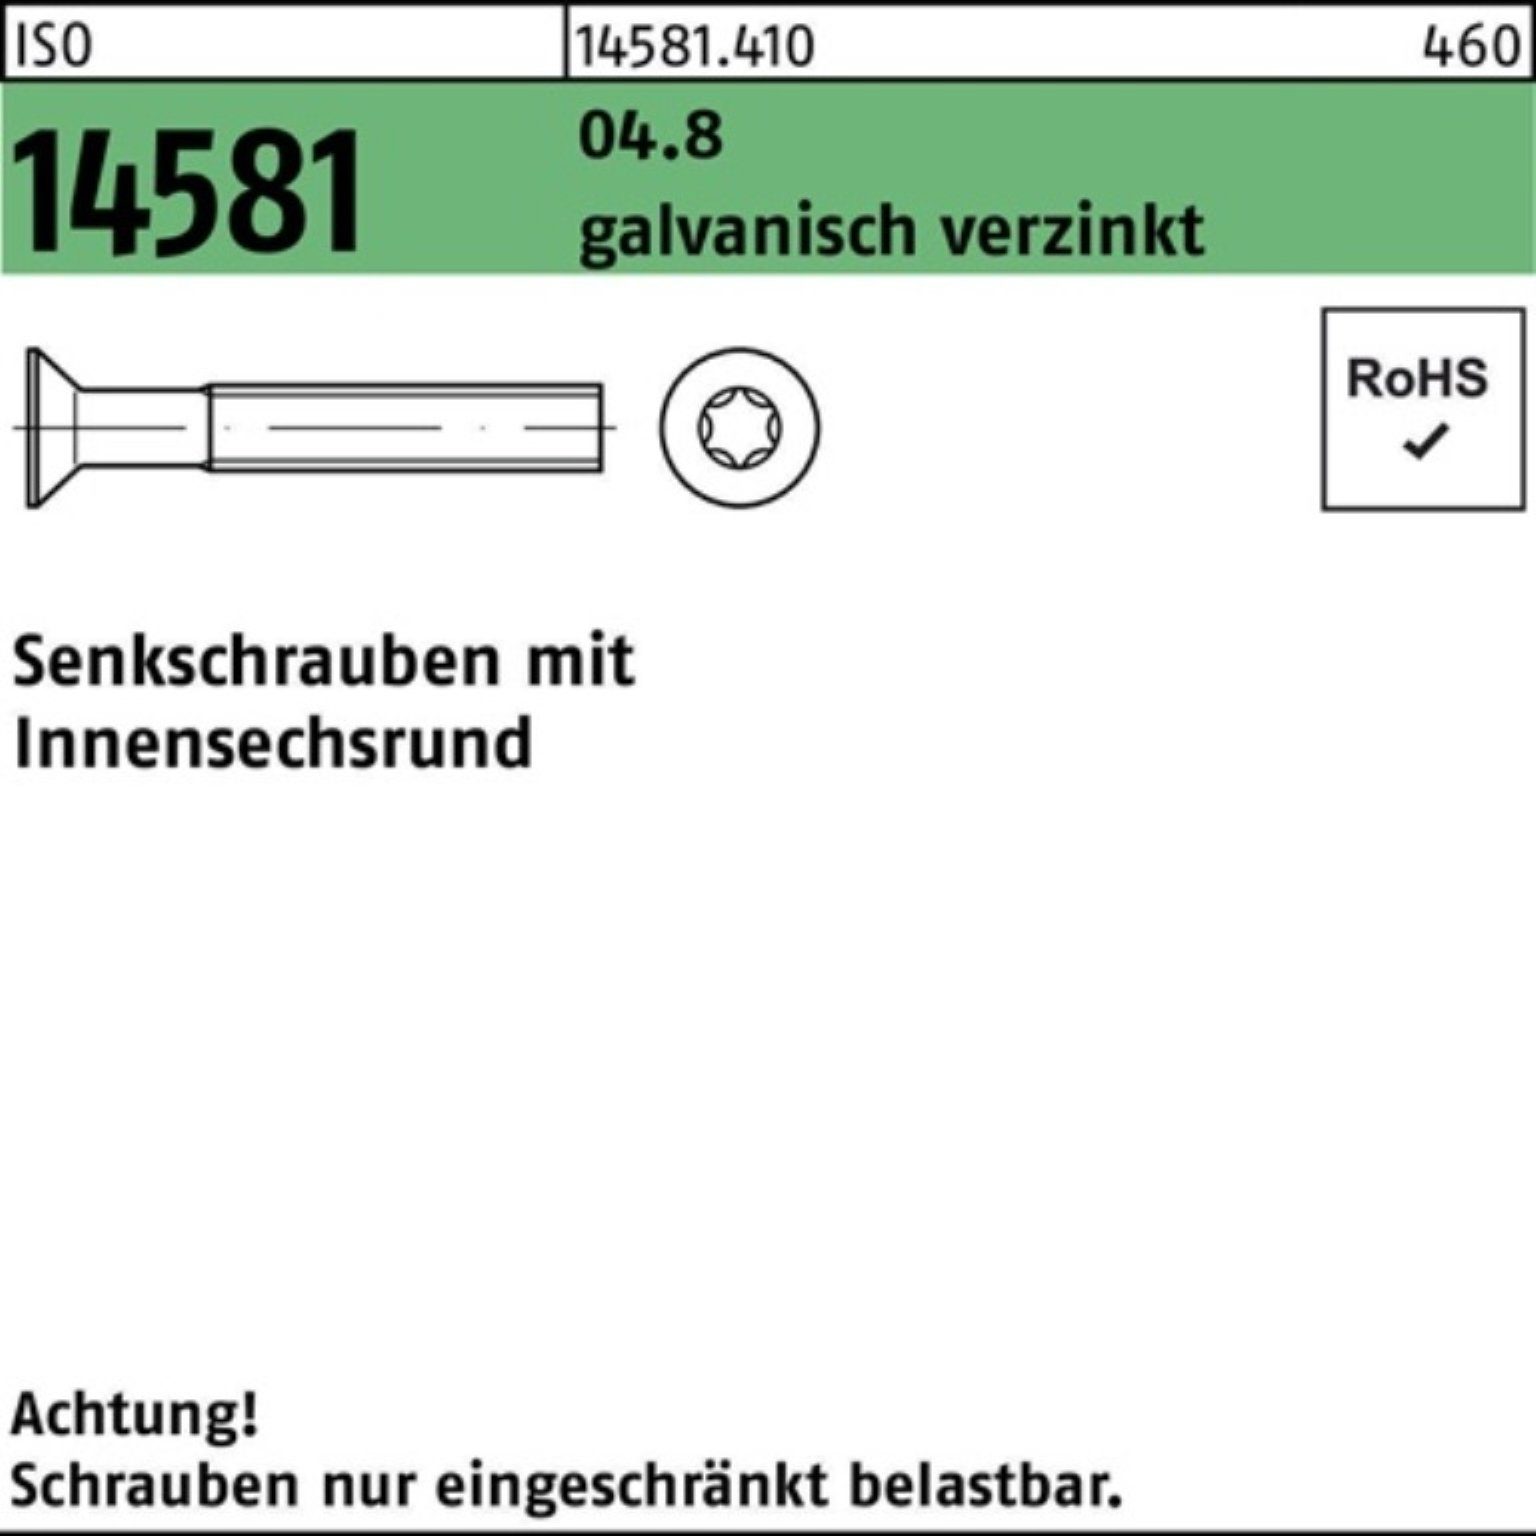 ISR T20 M4x12 Senkschraube 14581 2000S Pack Senkschraube ISO galv.verz. 04.8 Reyher 2000er